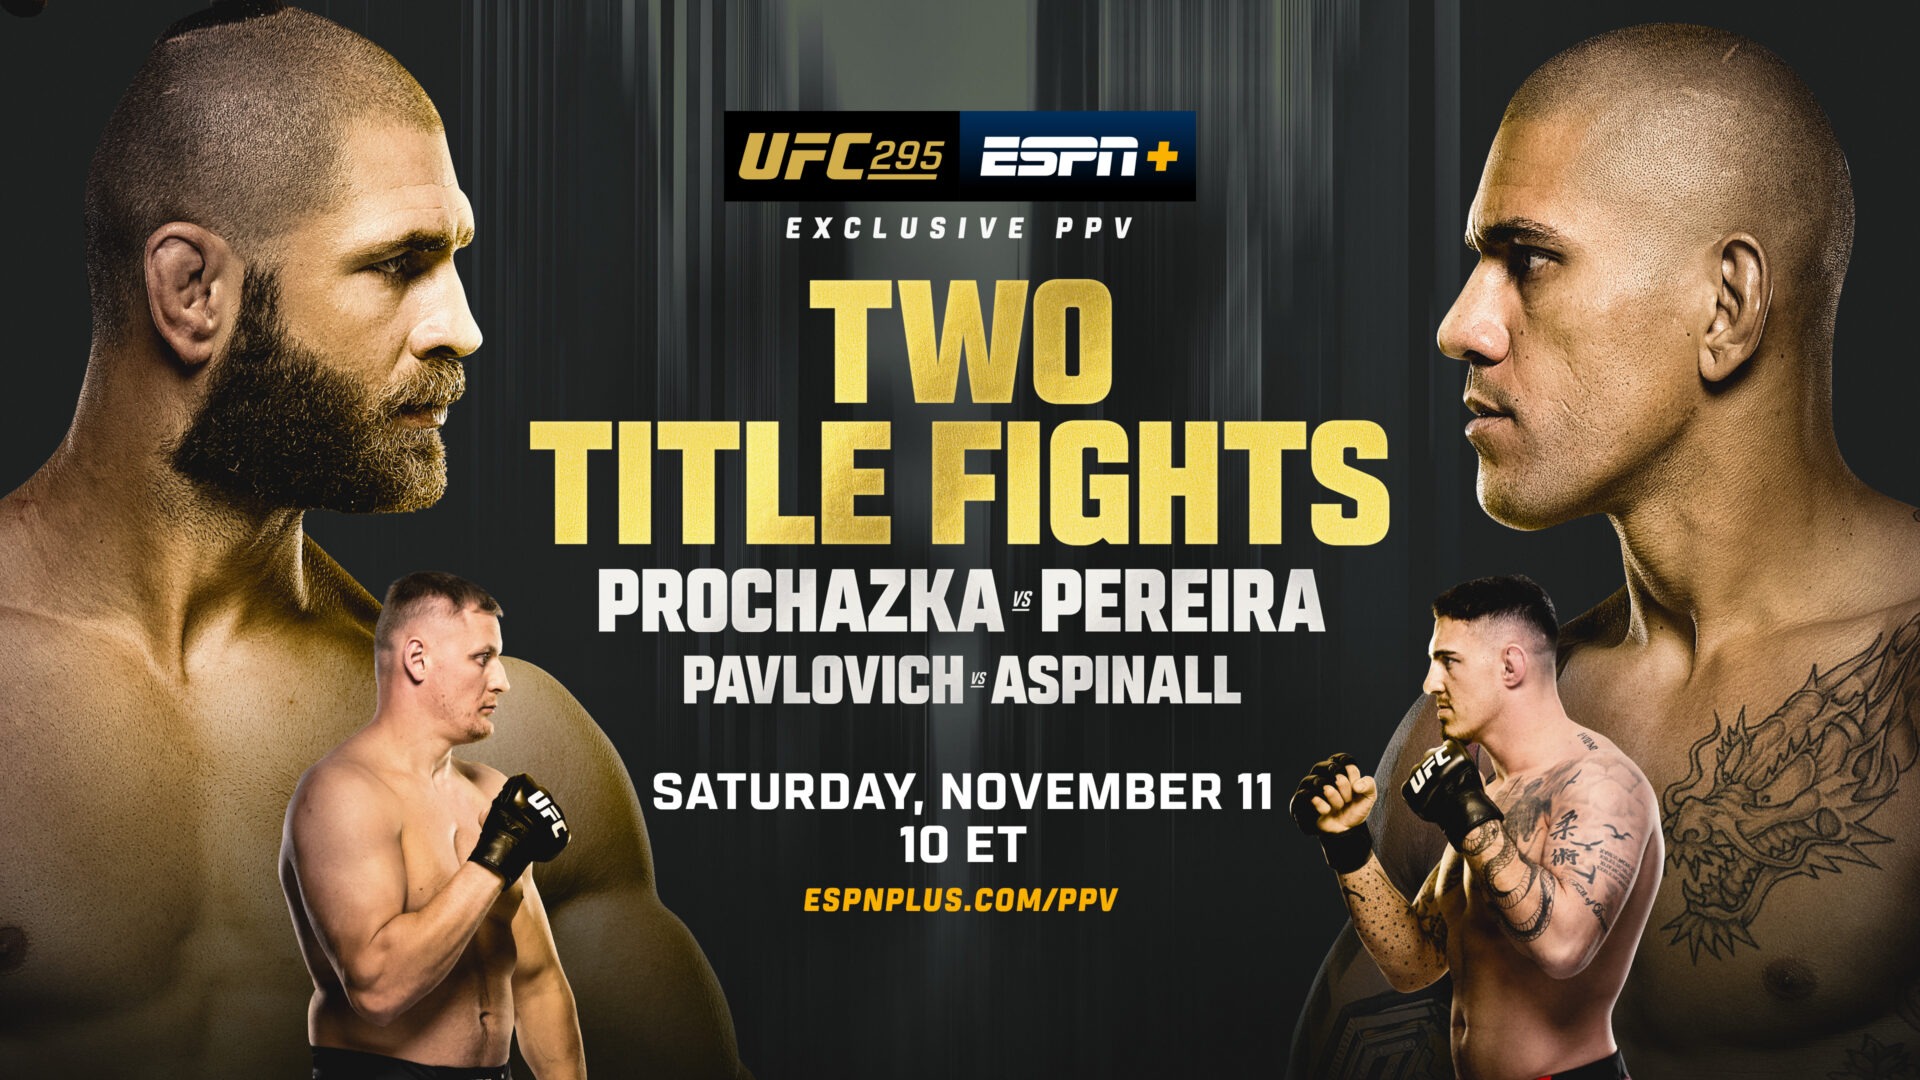 How much is UFC 295 PPV price on ESPN+? Prochazka vs. Pereira cost 1